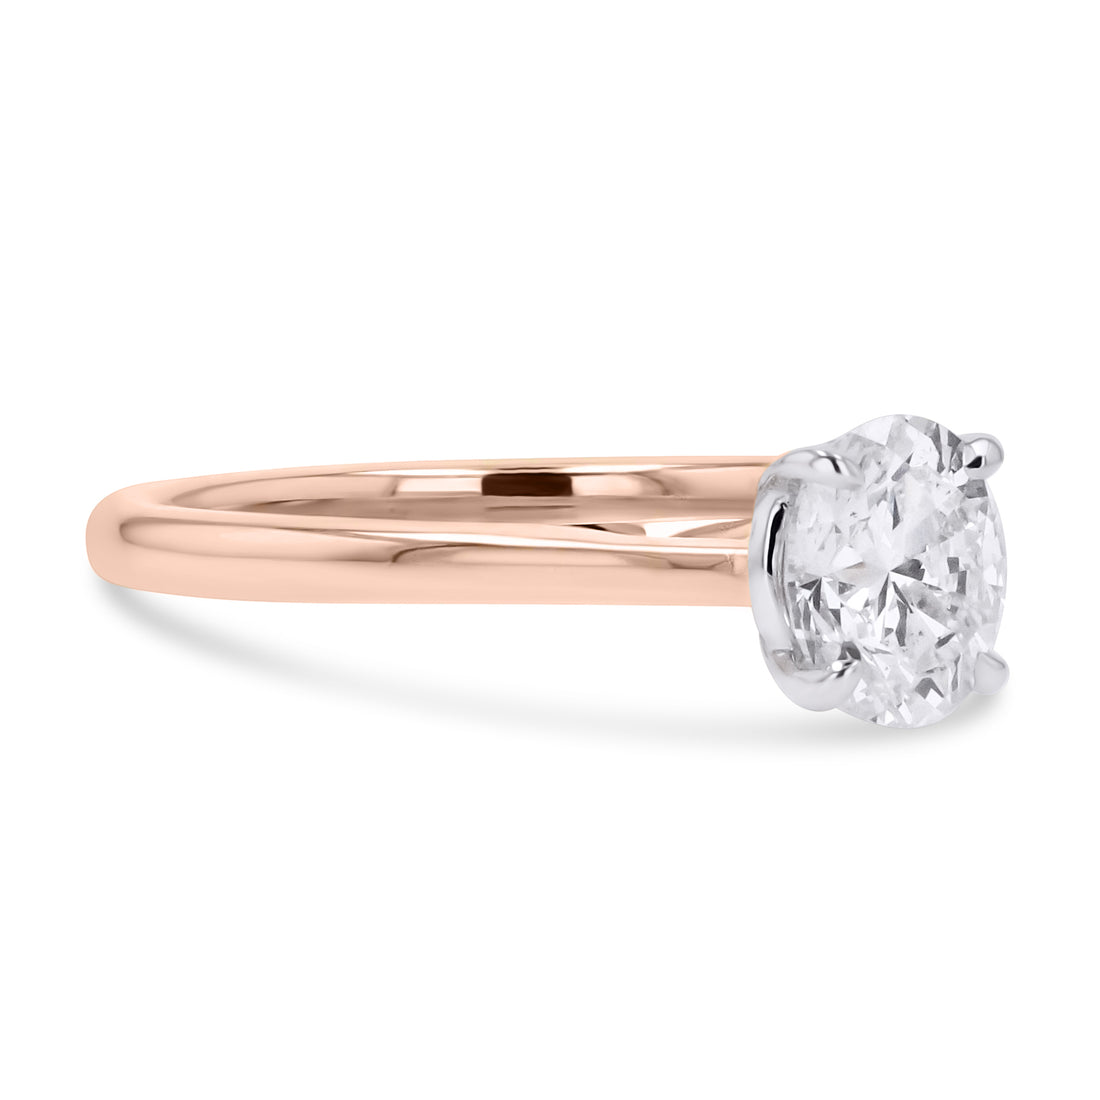 Black Label Rose Gold Set Engagement Ring - Skeie's Jewelers